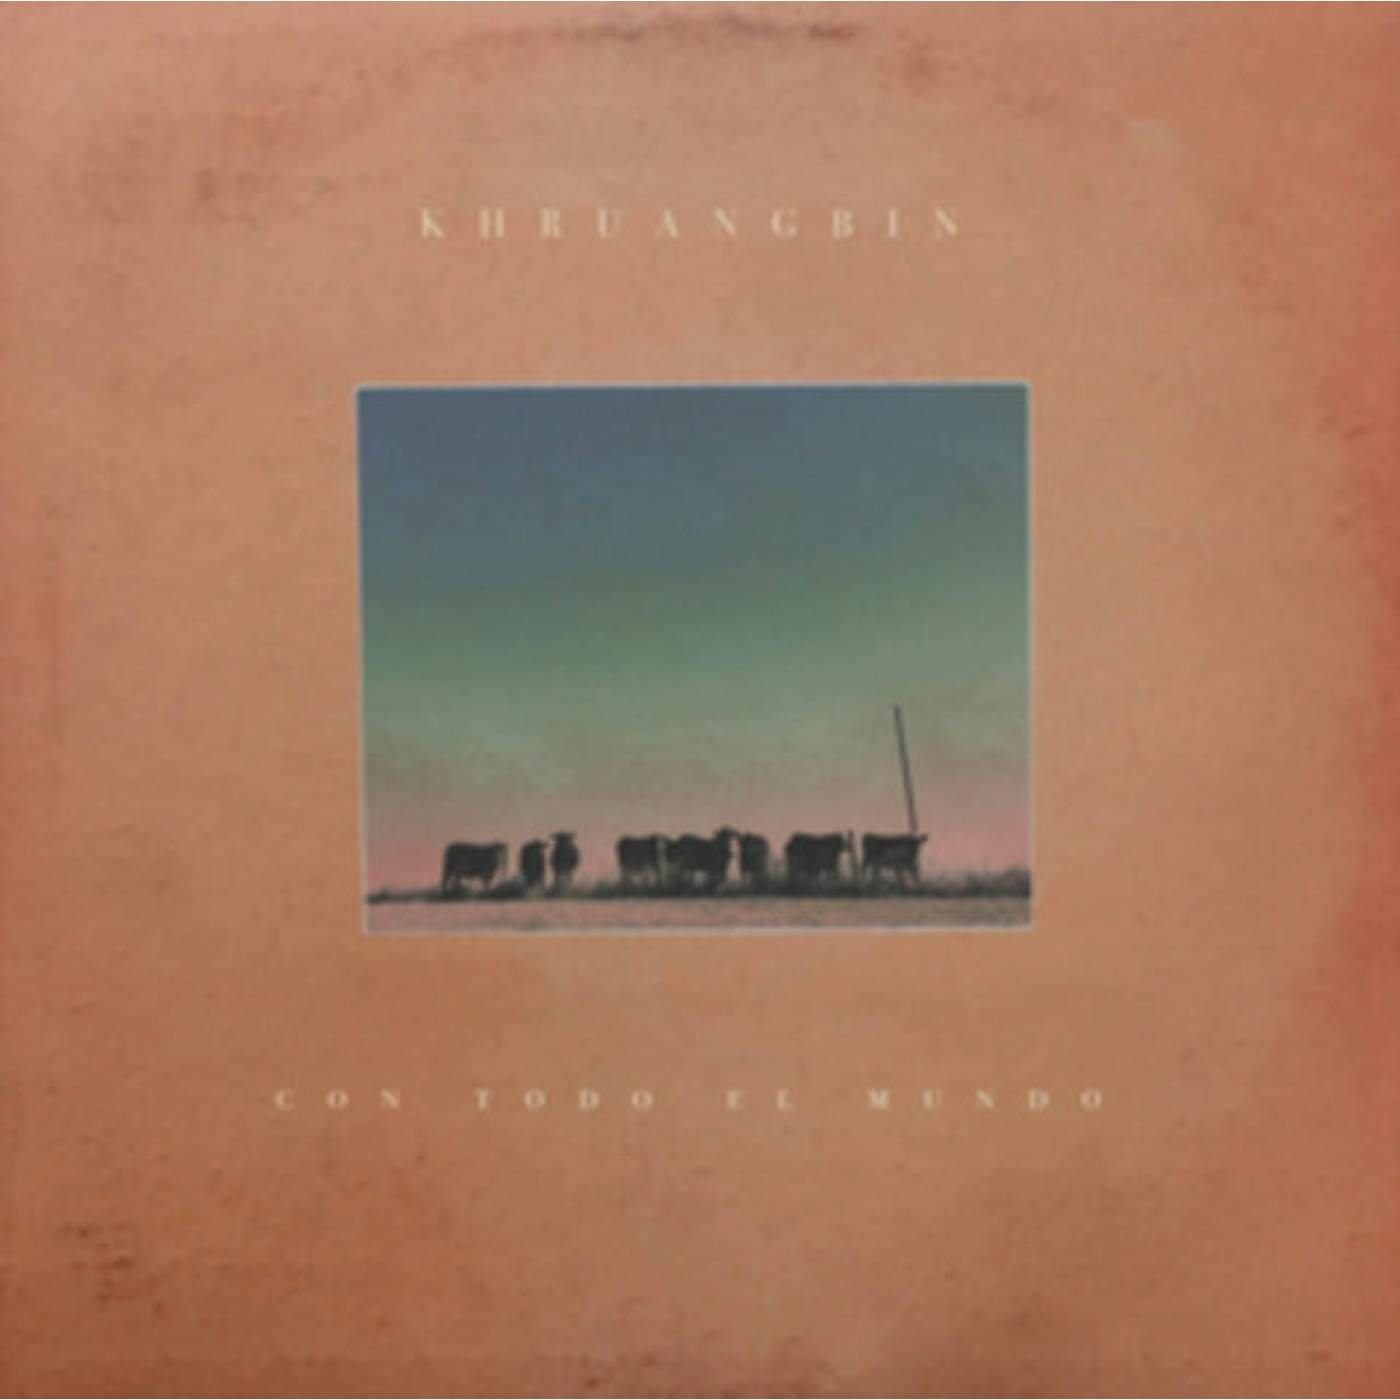 Khruangbin CD - Con Todo El Mundo